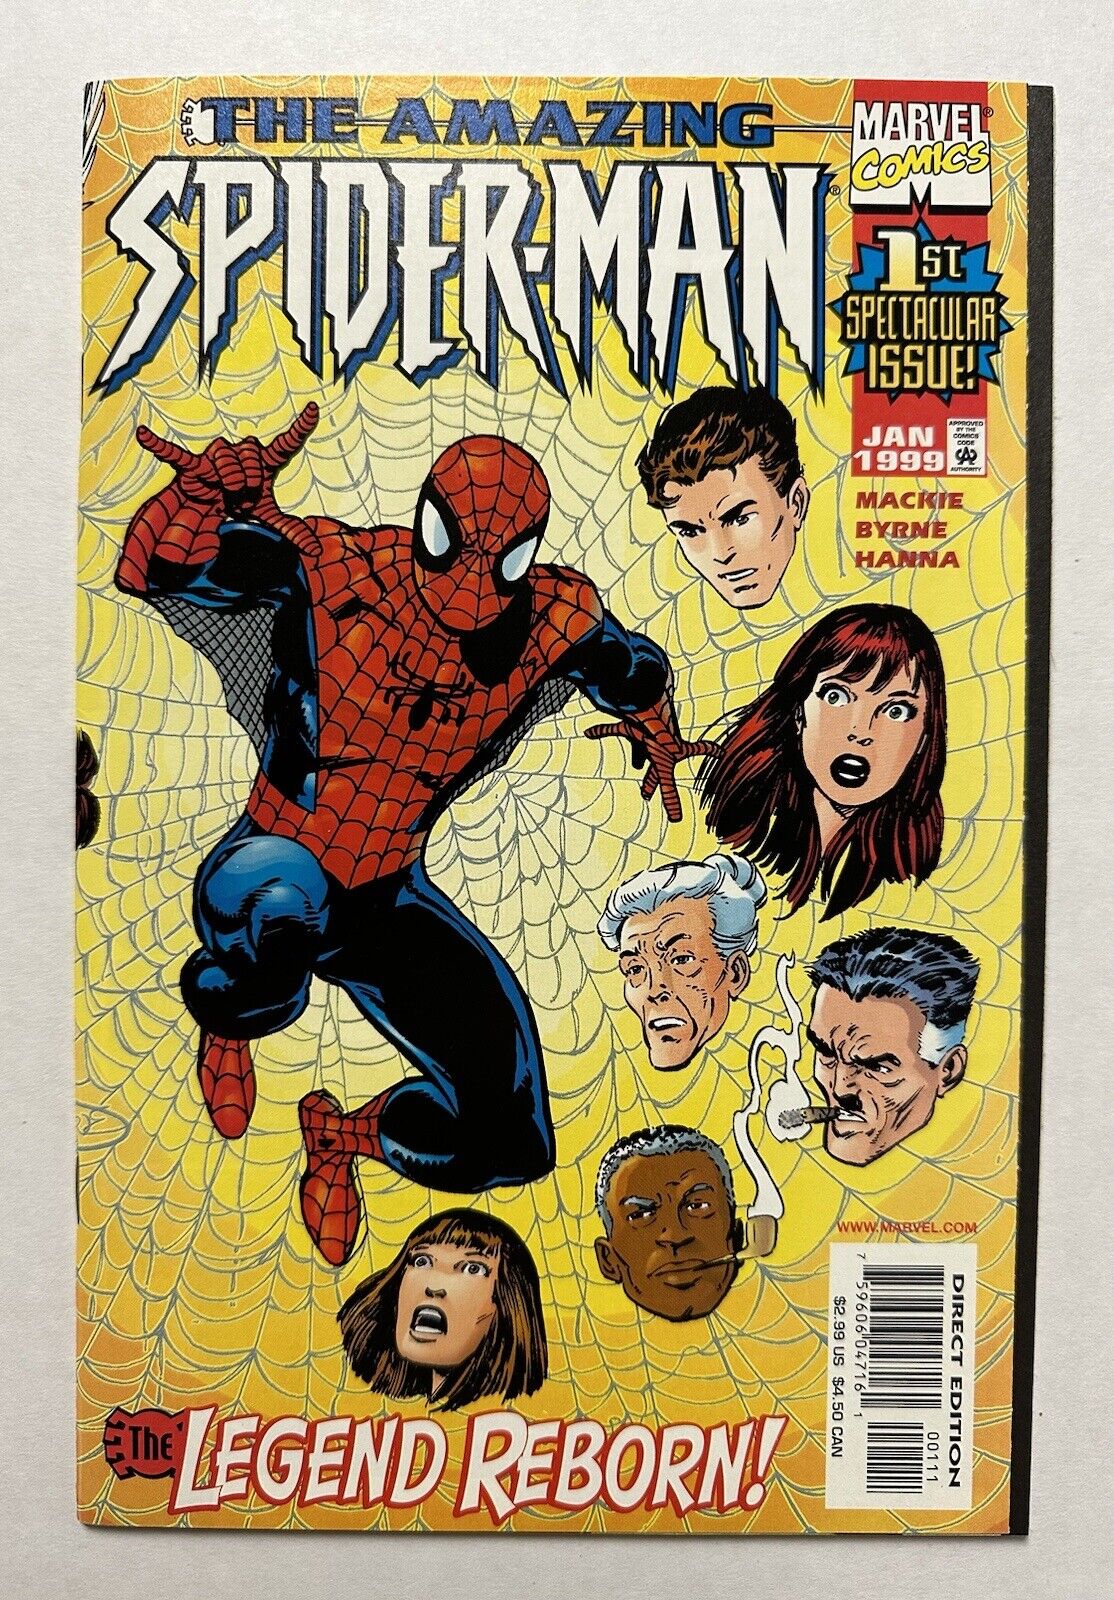 The Amazing Spider-Man #1 (Marvel Comics January 1999)